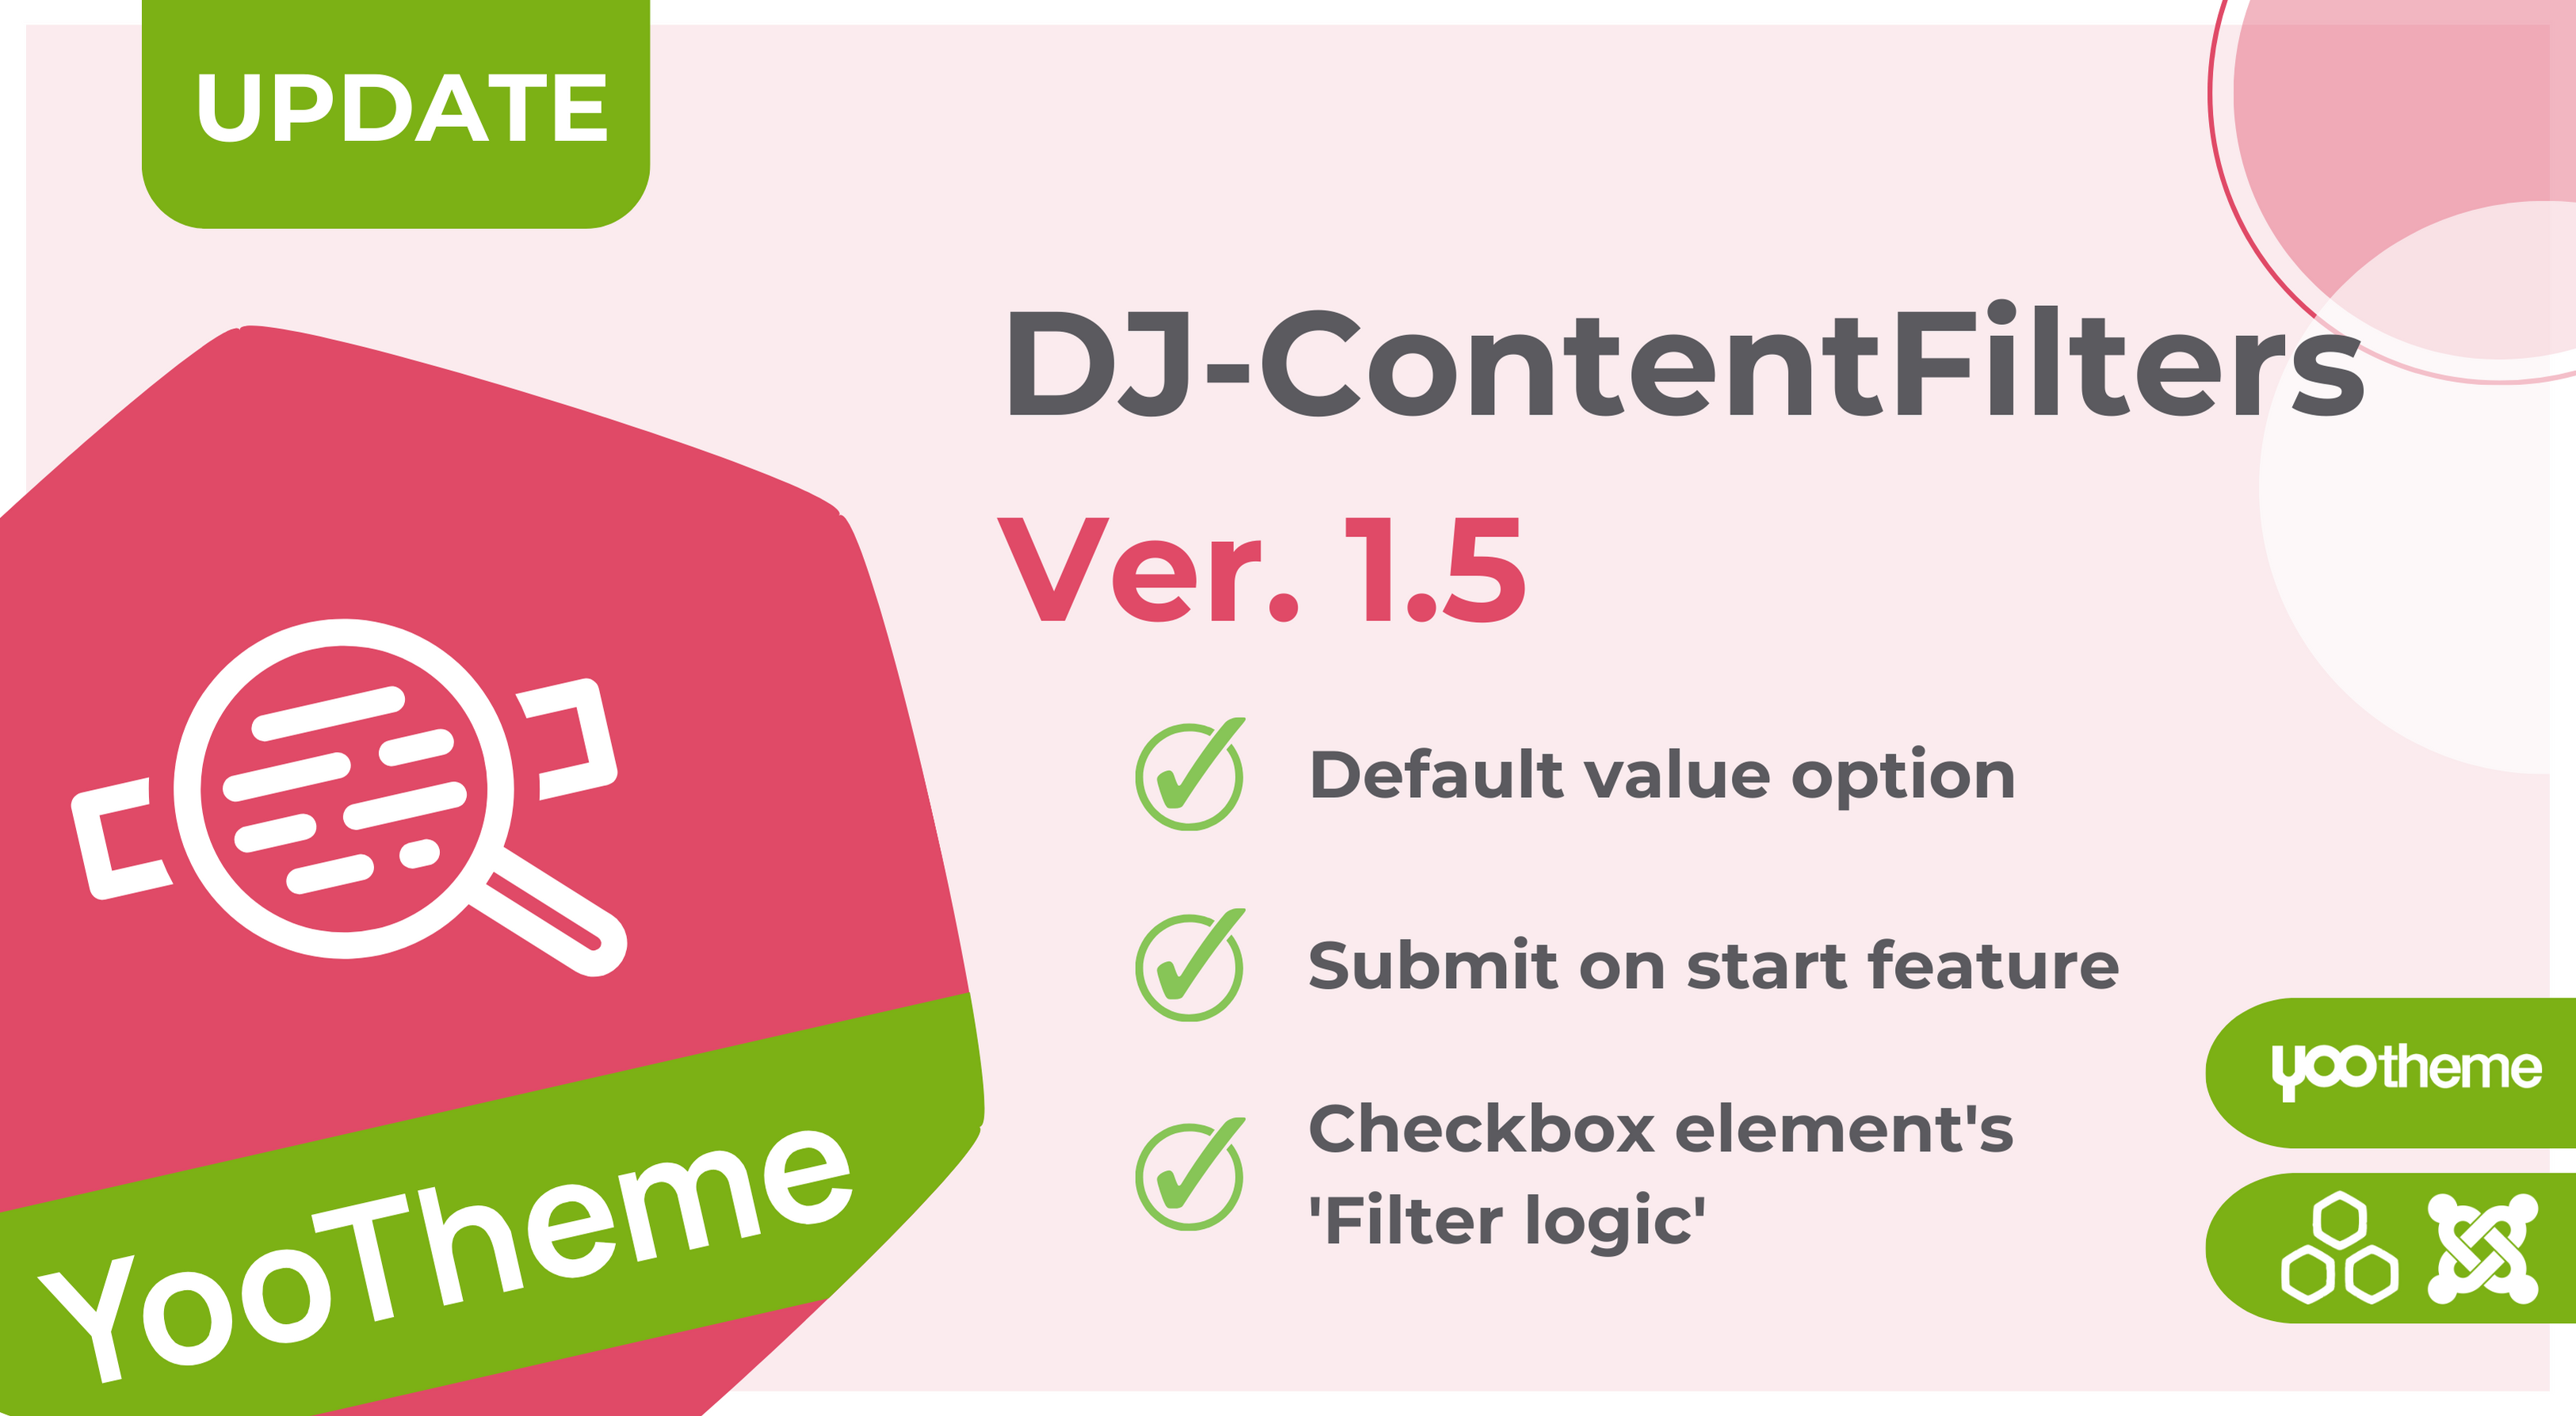 [UPDATE] DJ-ContentFilters ver. 1.5 stable - meet the new features